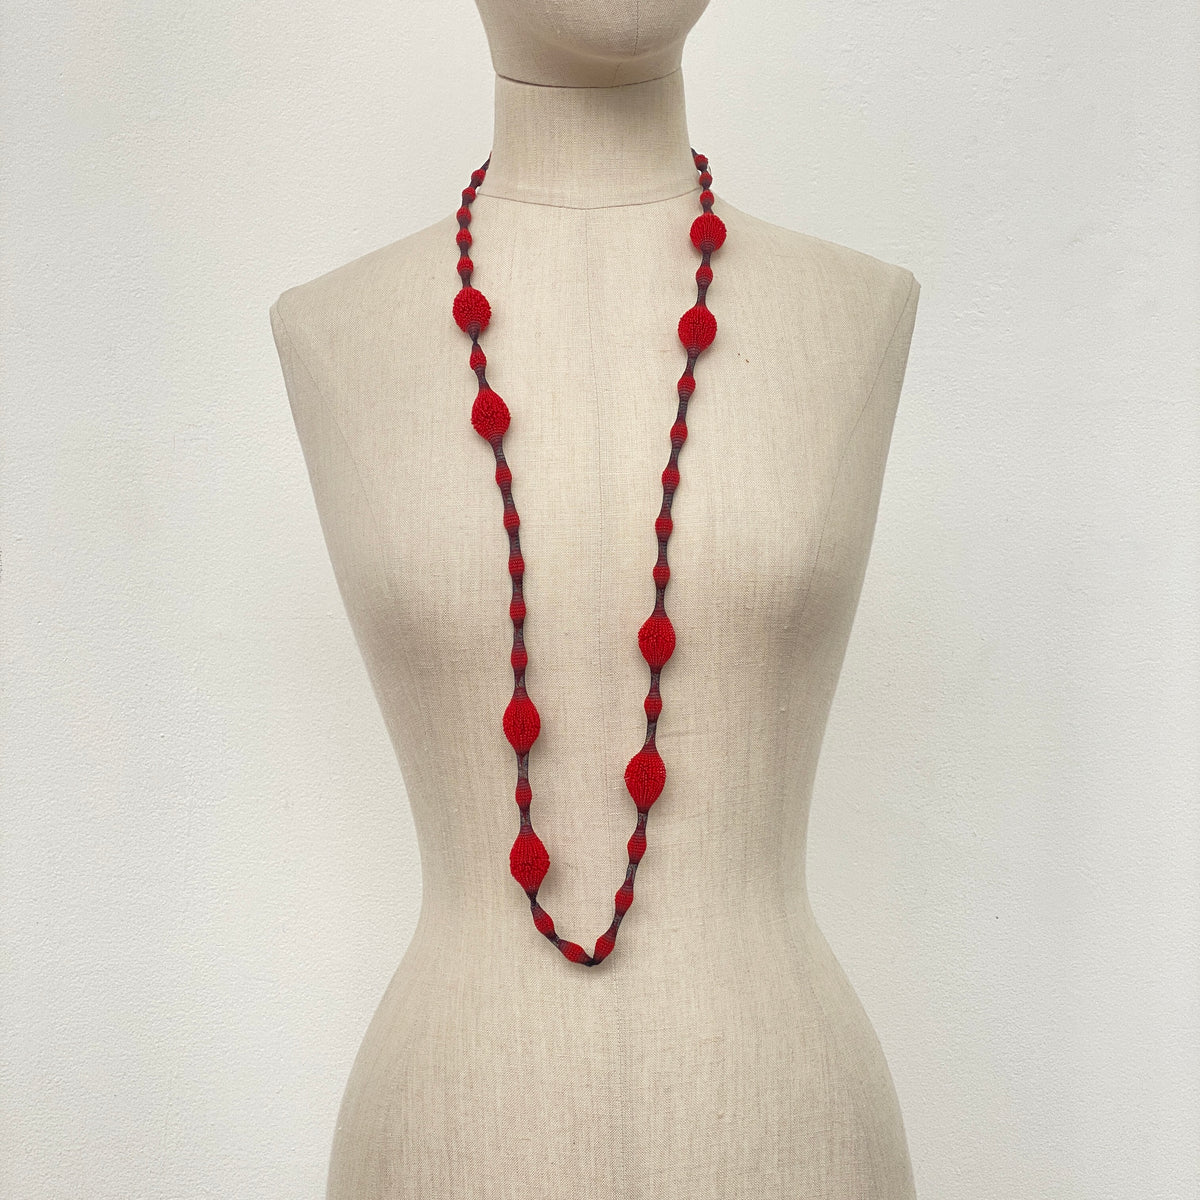 Sautoir Black Red Necklace